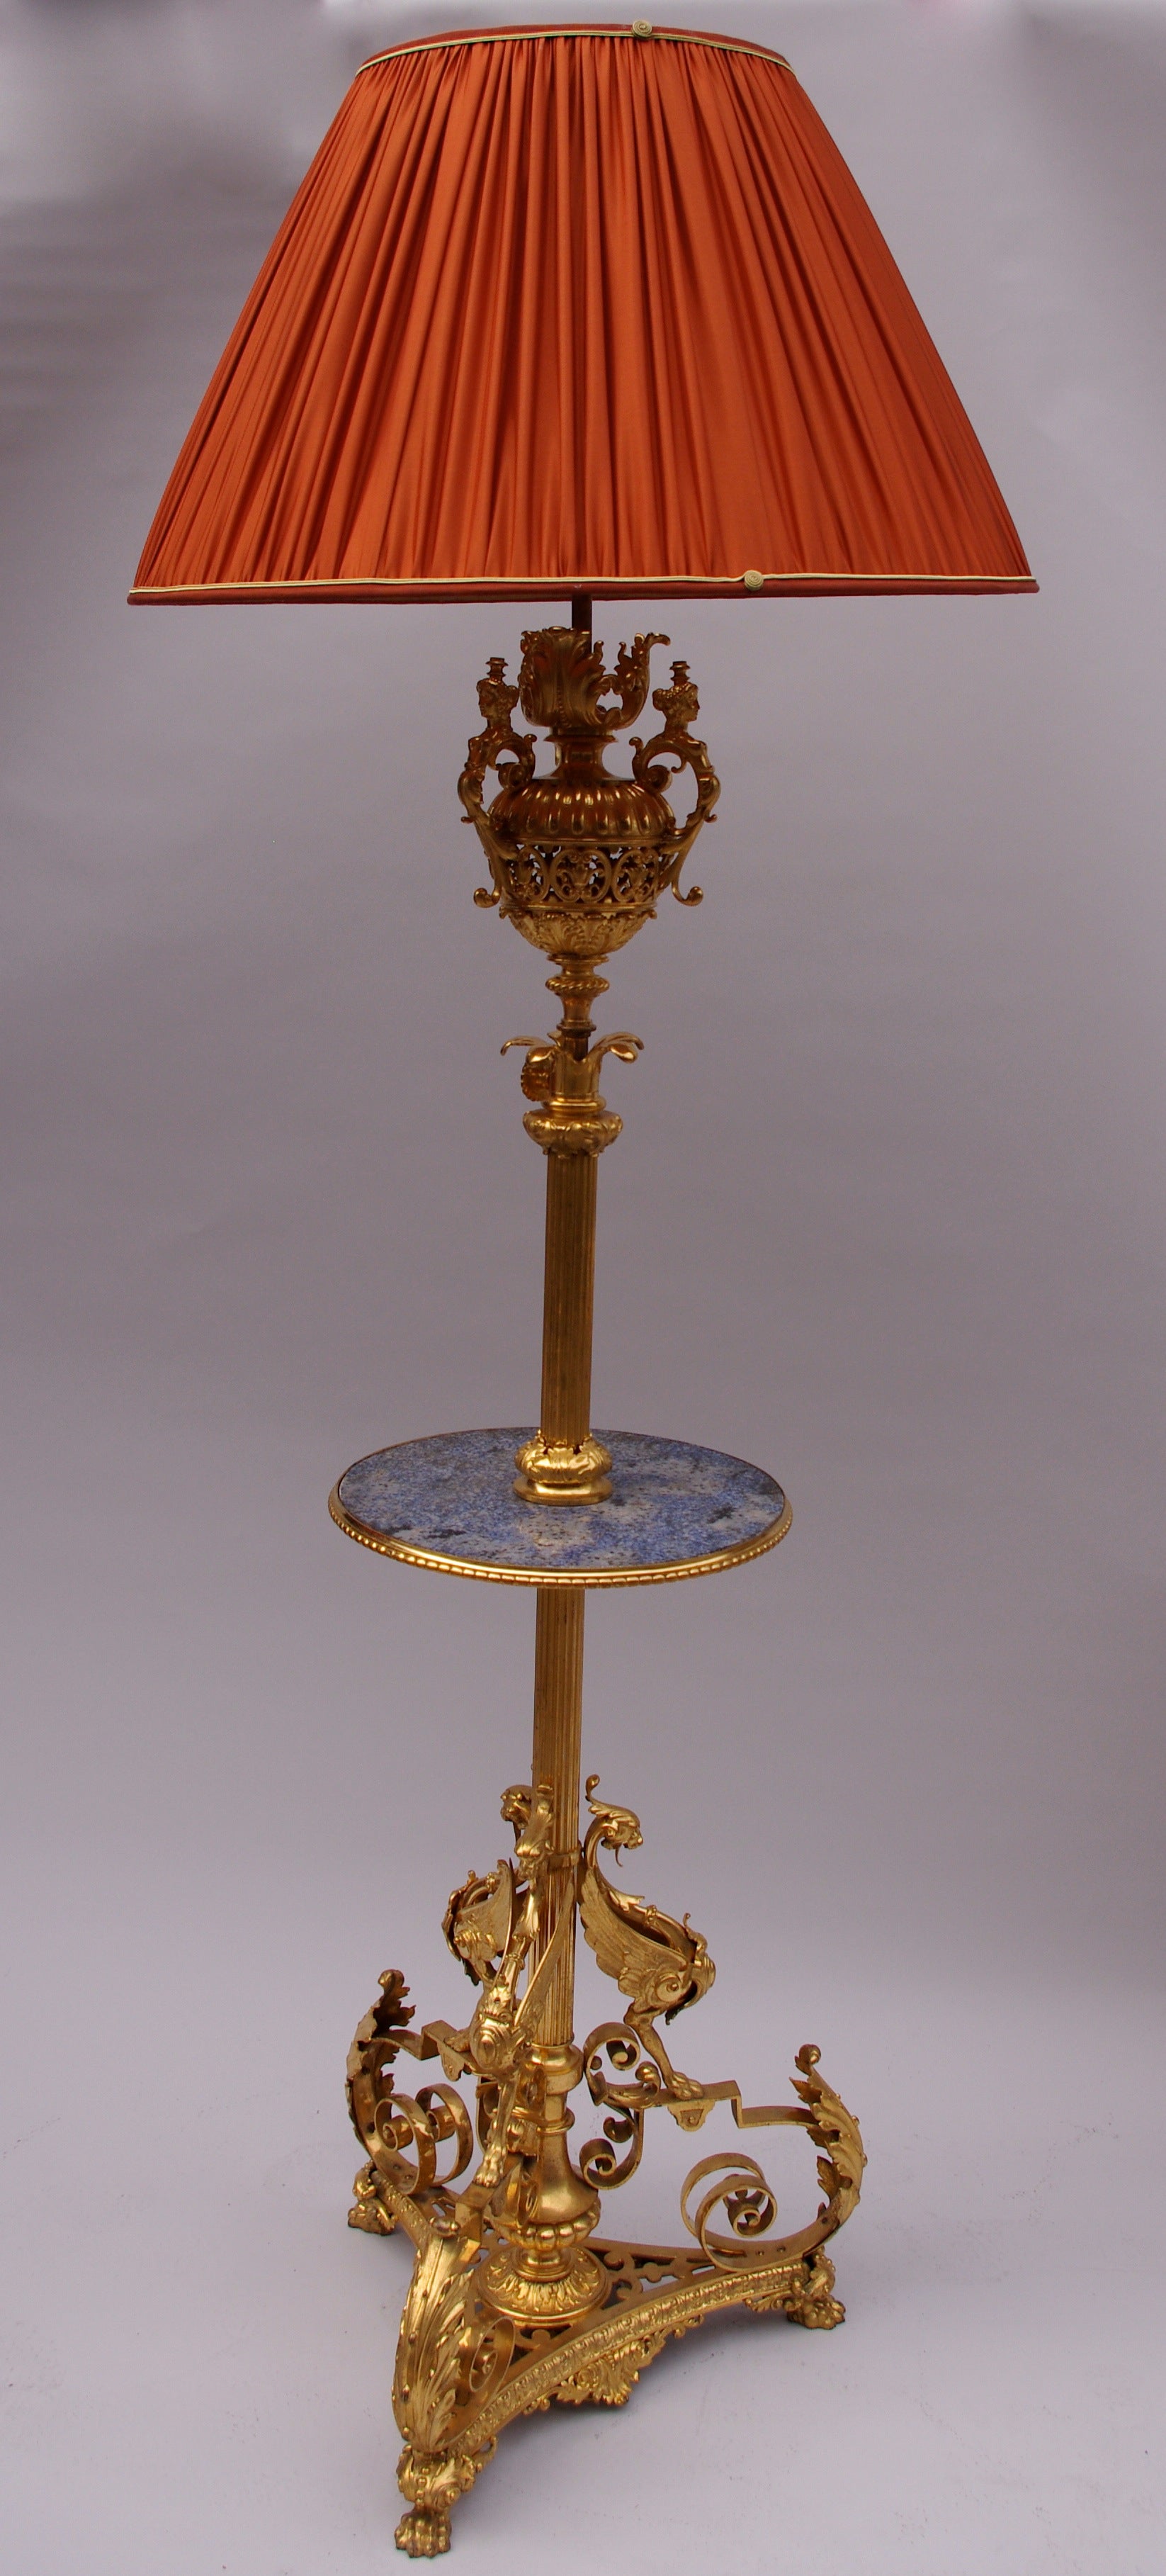 Renaissance gilded bronze floor lamp with pedestal table